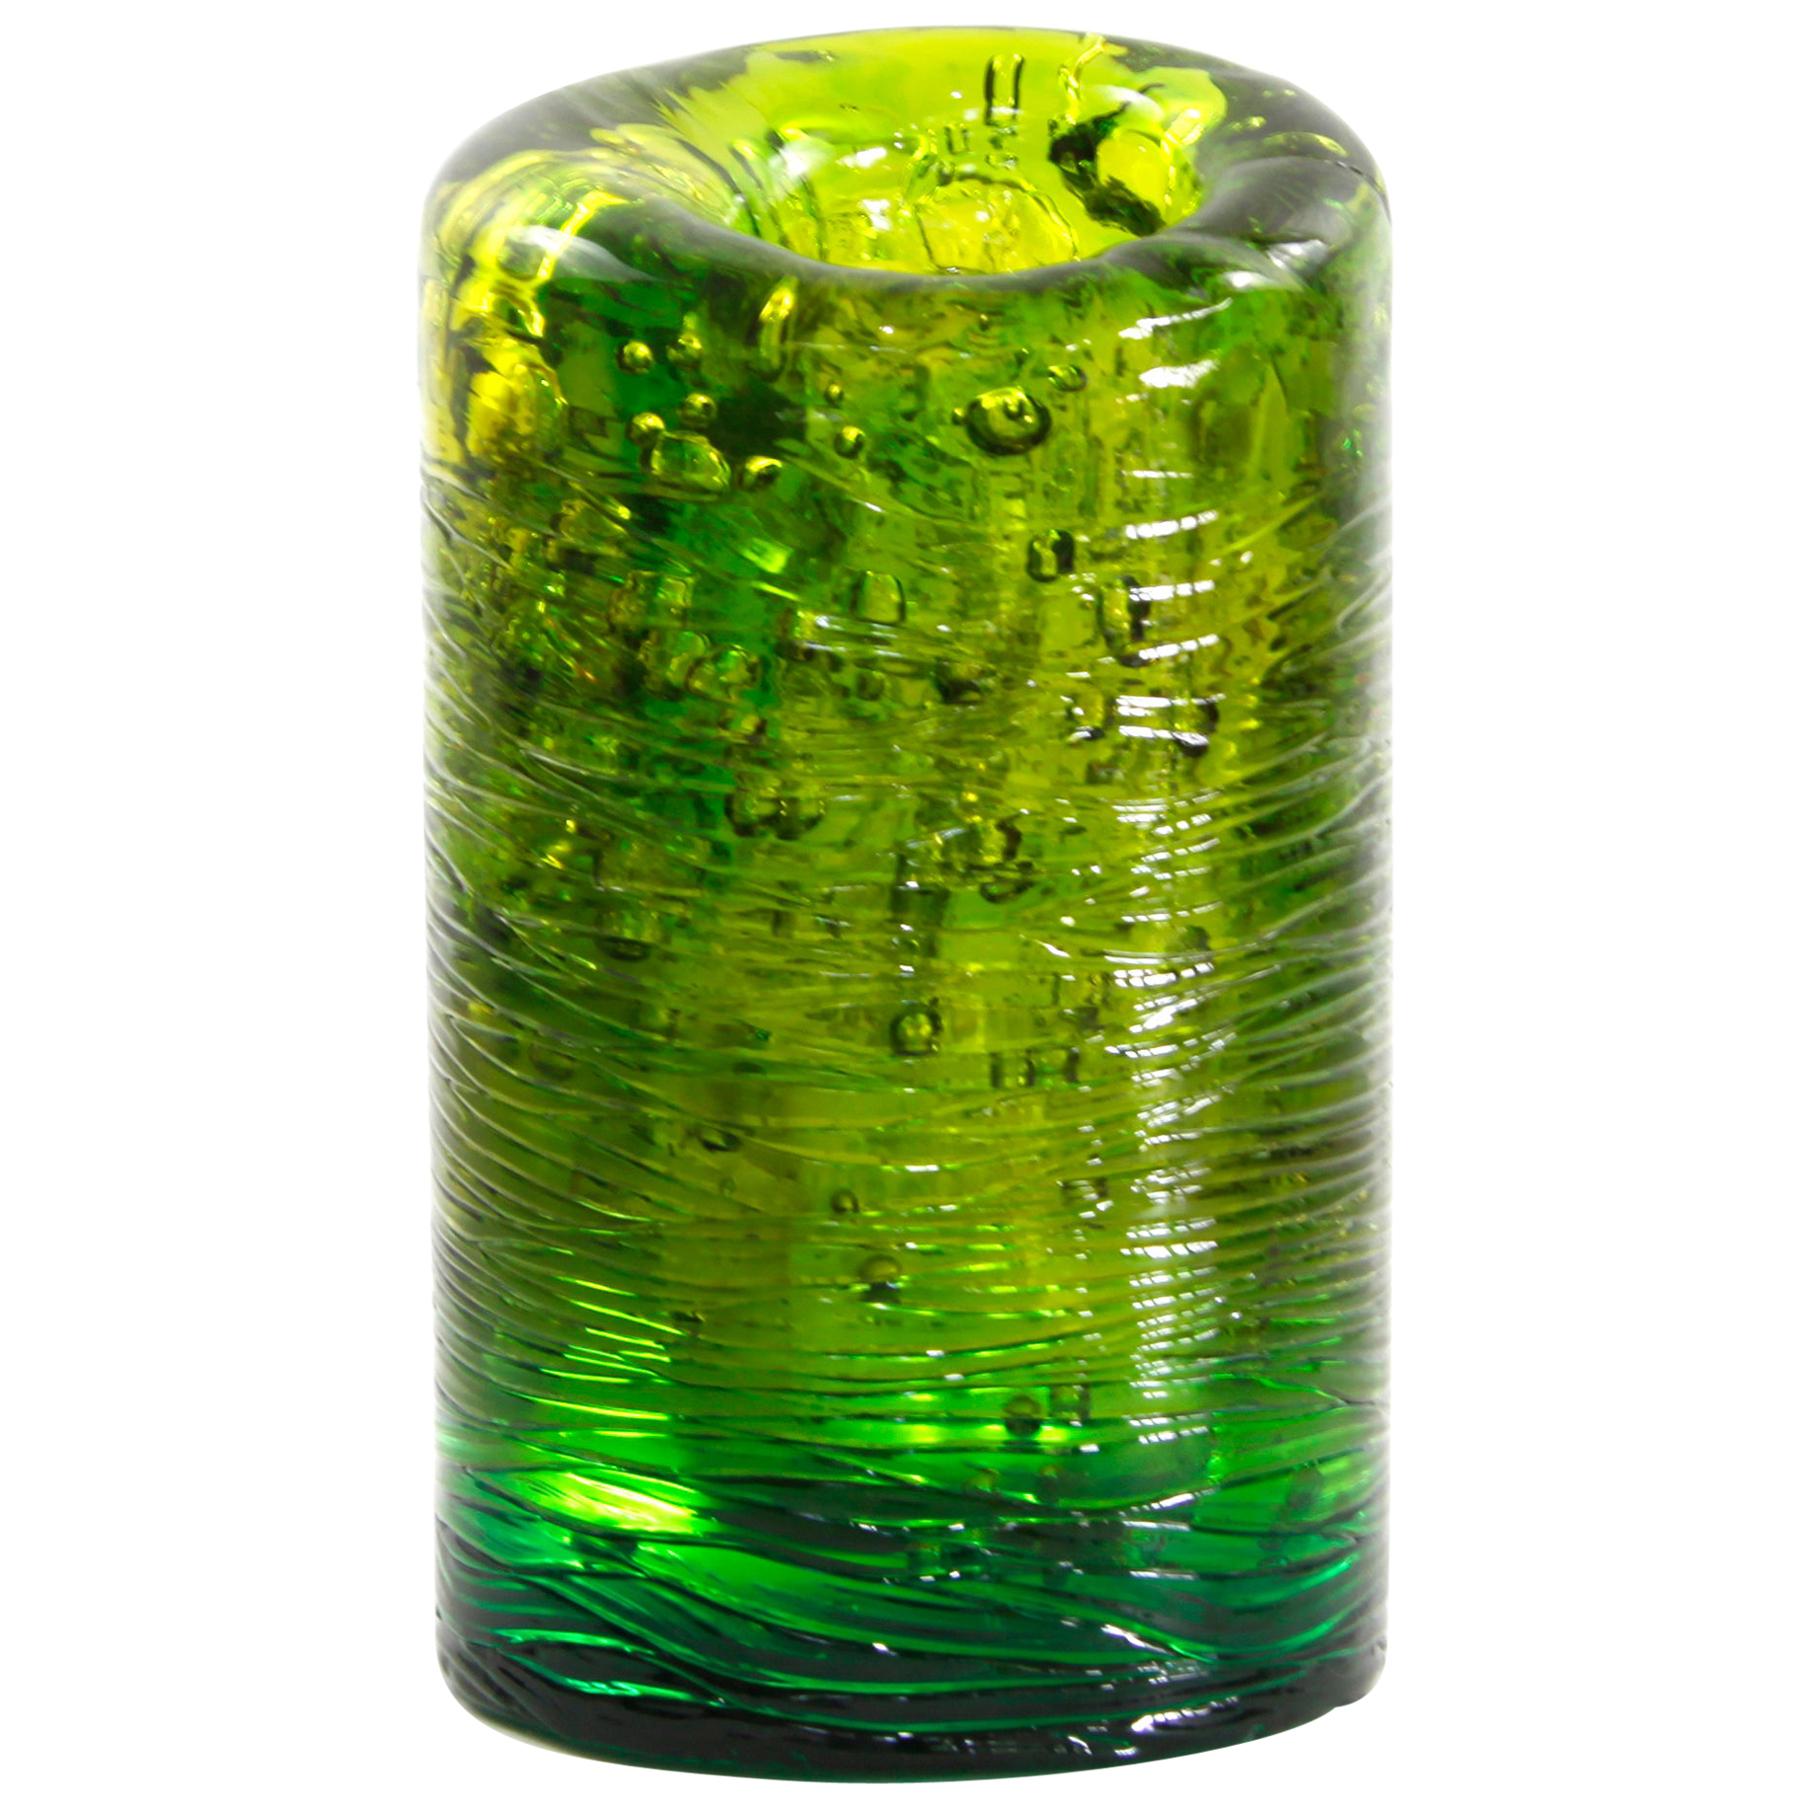 Grand vase contemporain Jungle, en vert citron monochrome, de Jacopo Foggini